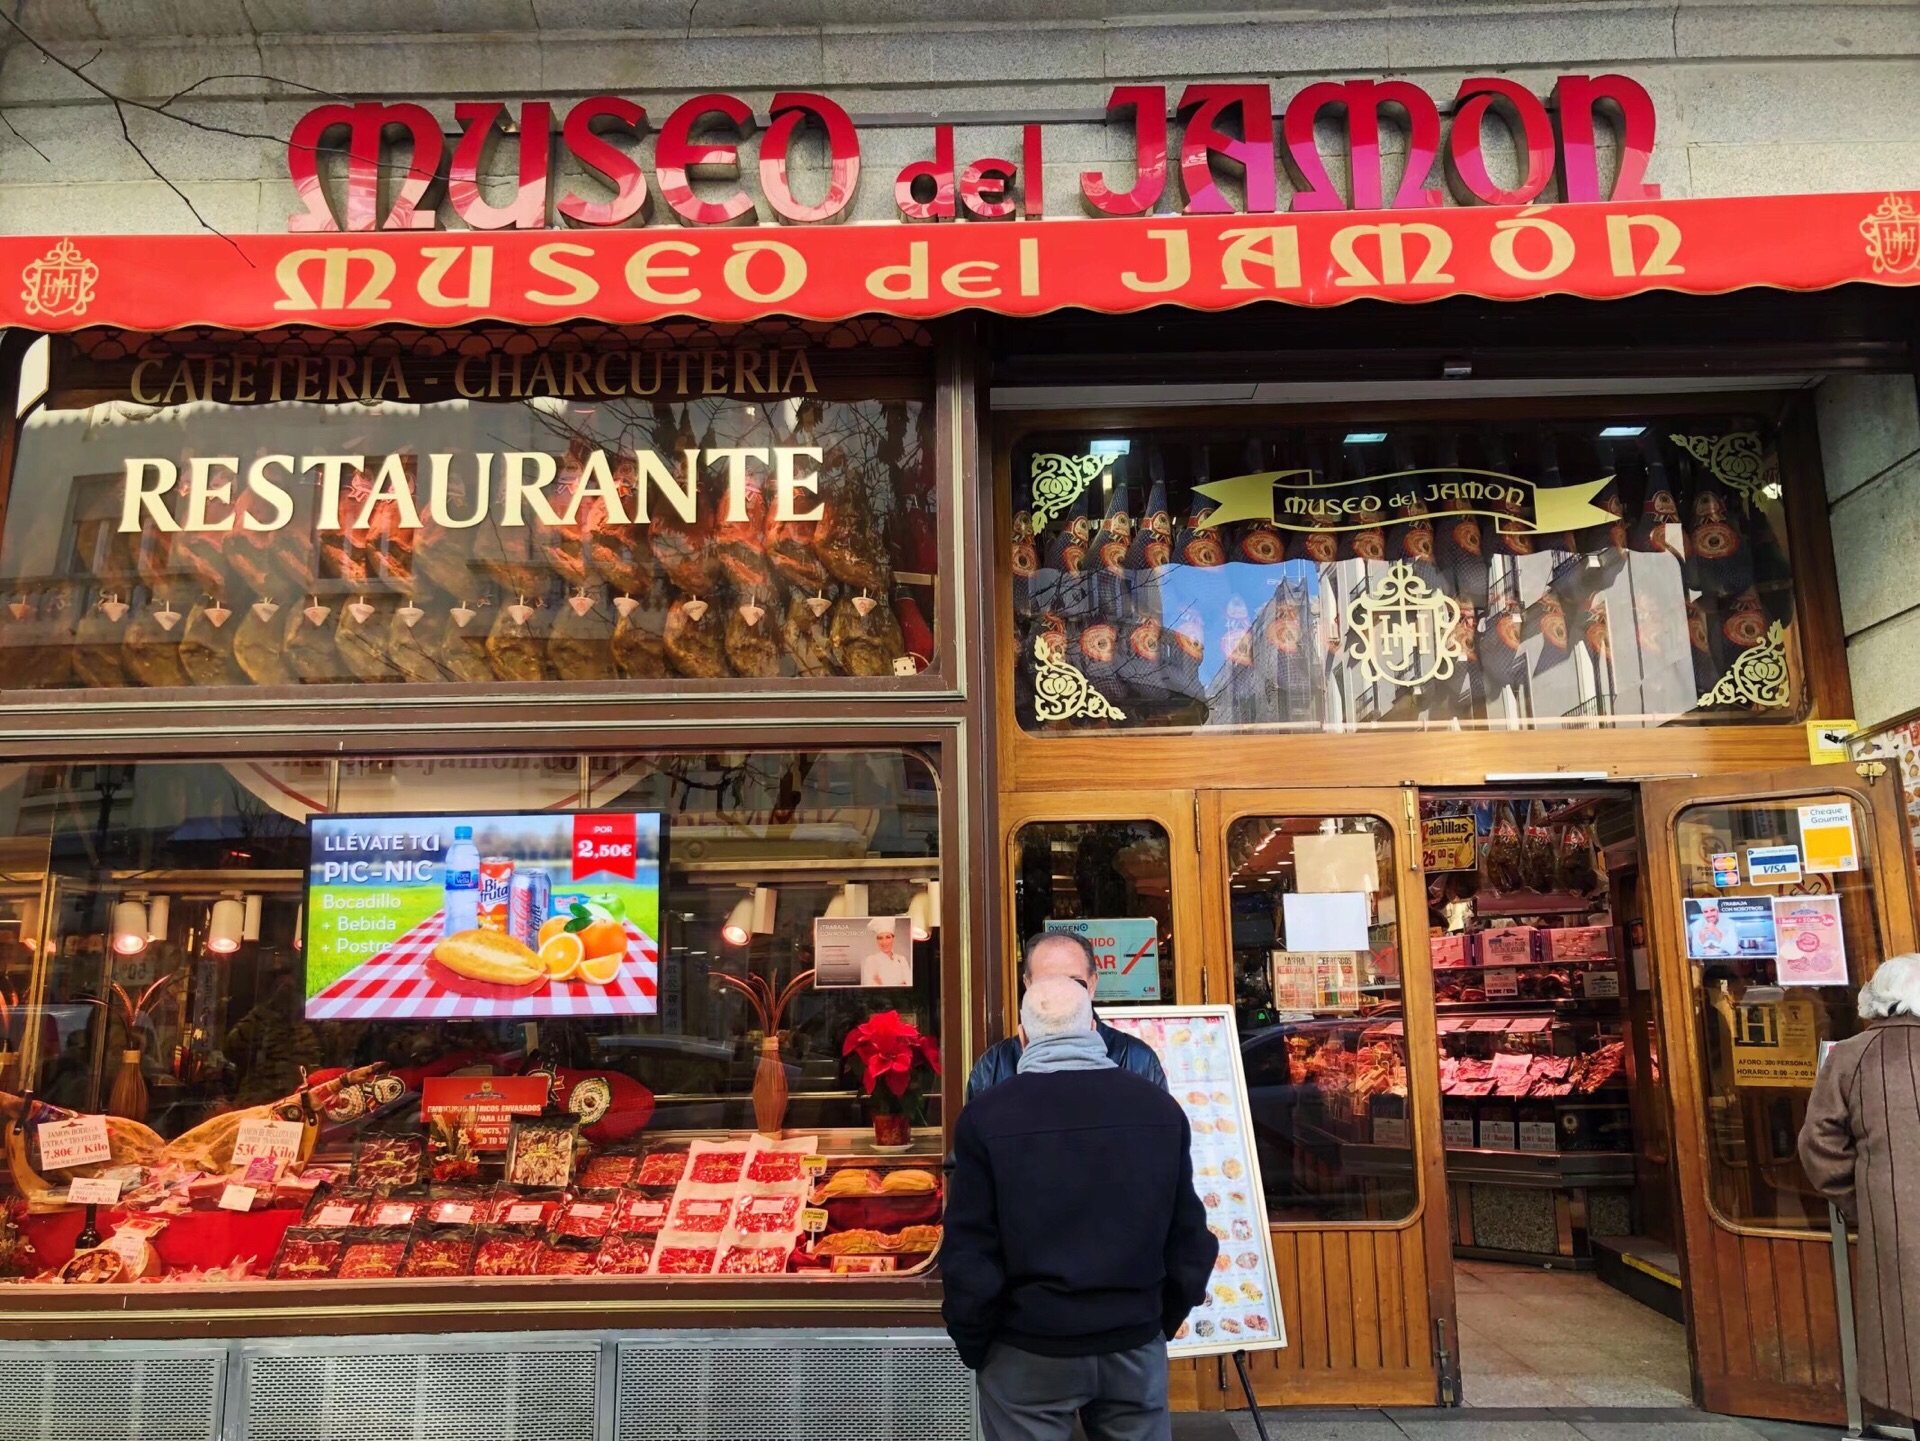 2023Museo del Jamon美食餐厅,马德里Very有名的火腿博物馆...【去哪儿攻略】